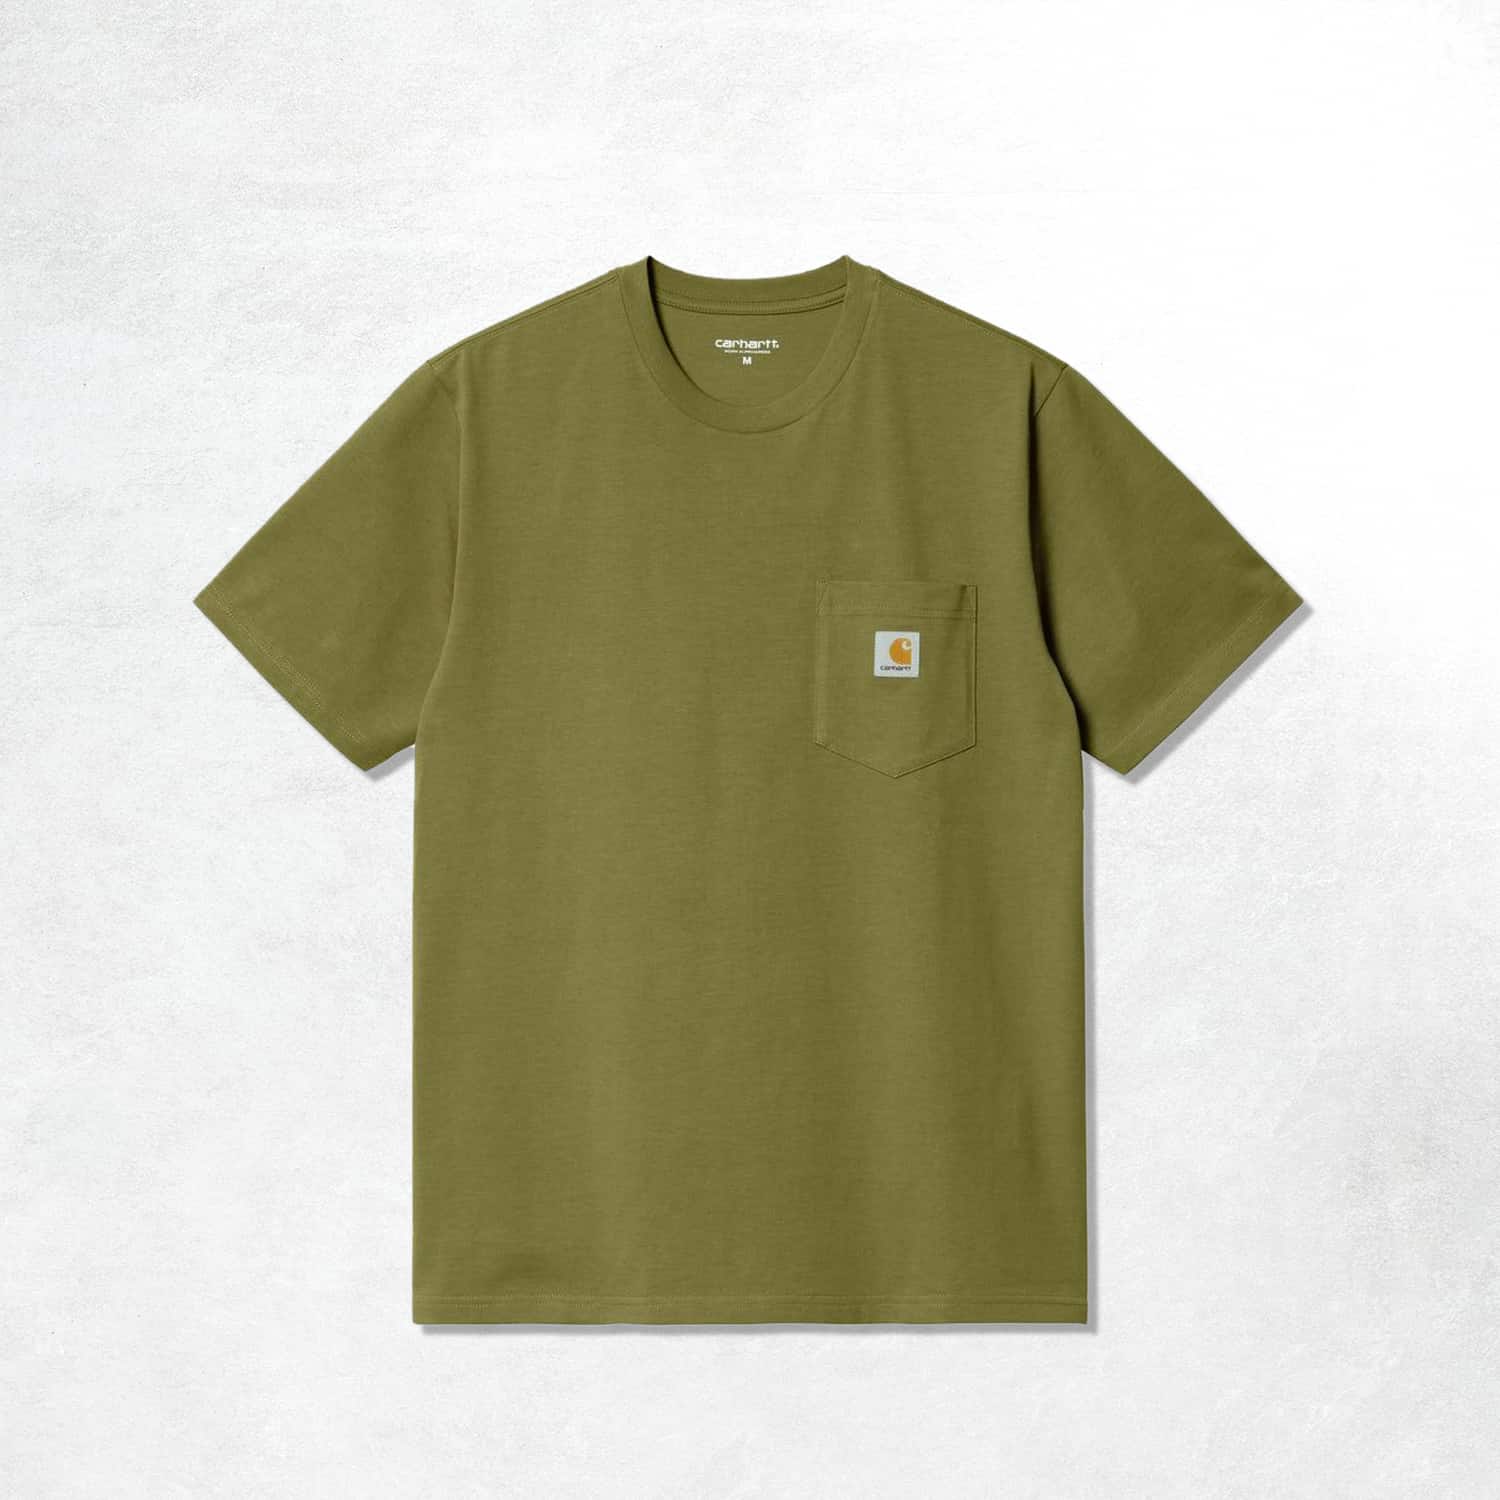 Carhartt WIP S/S Pocket T-Shirt: Kiwi (Front)